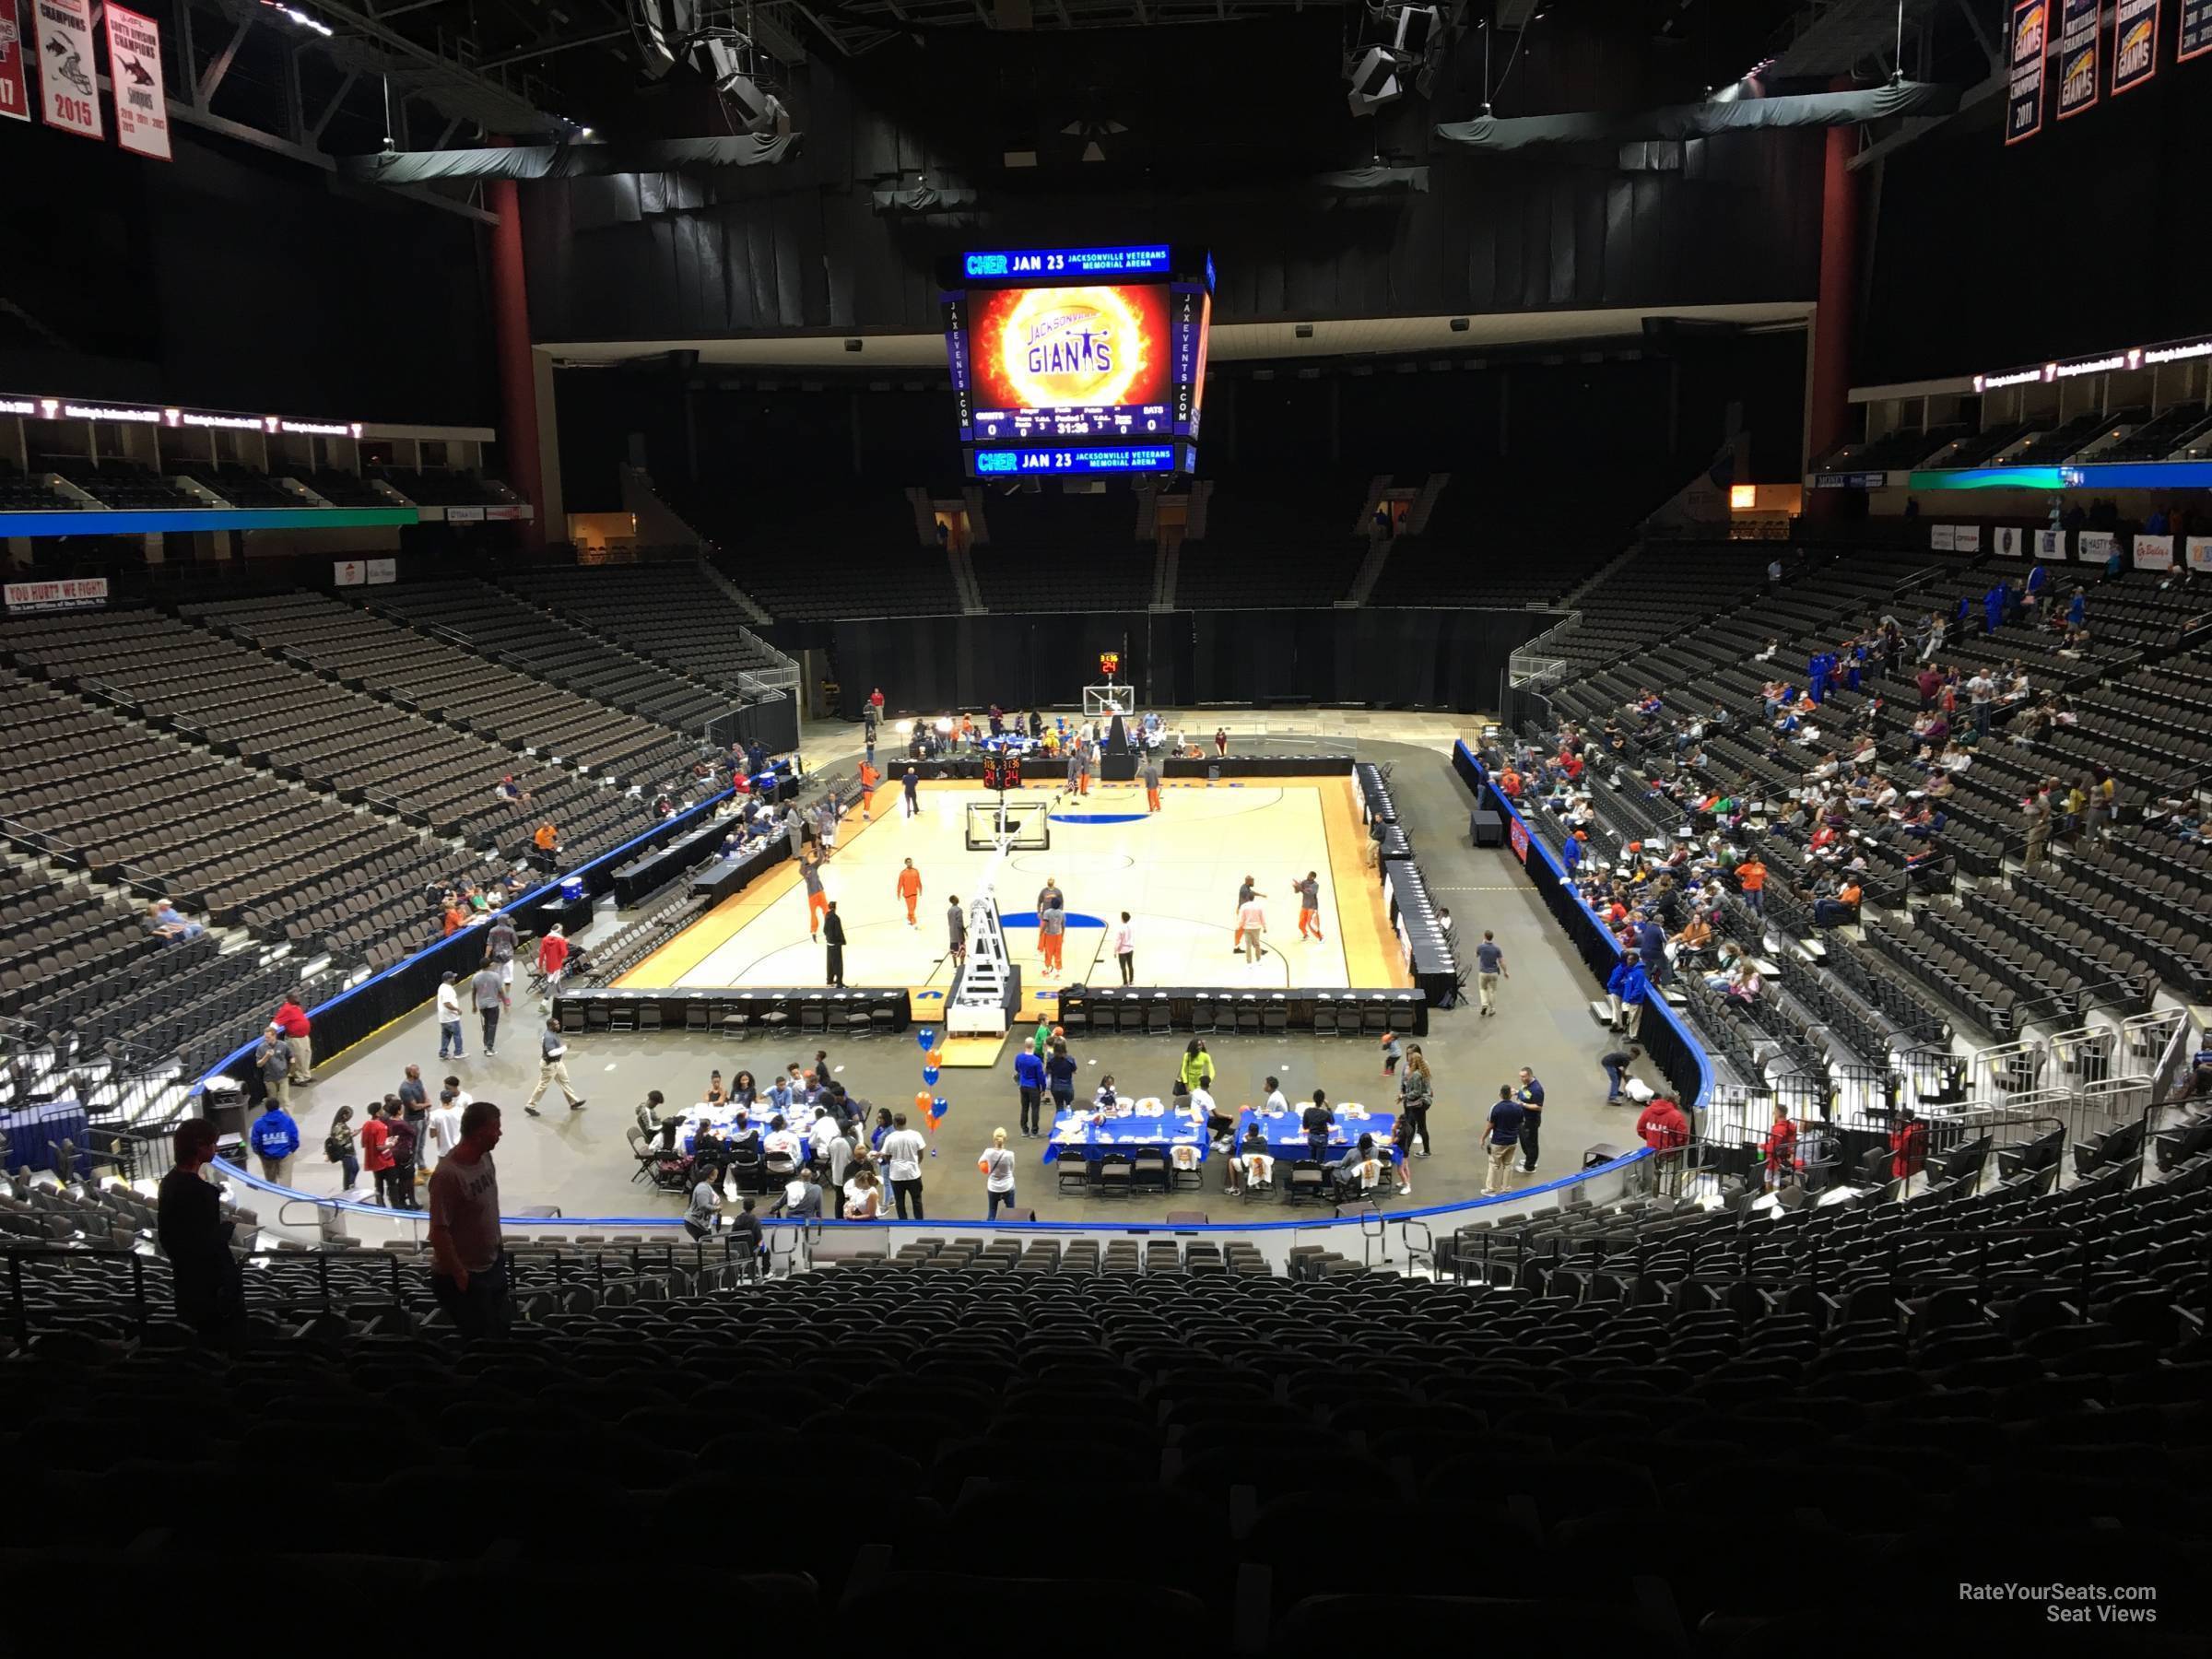 Section 108 at Vystar Veterans Memorial Arena for Basketball